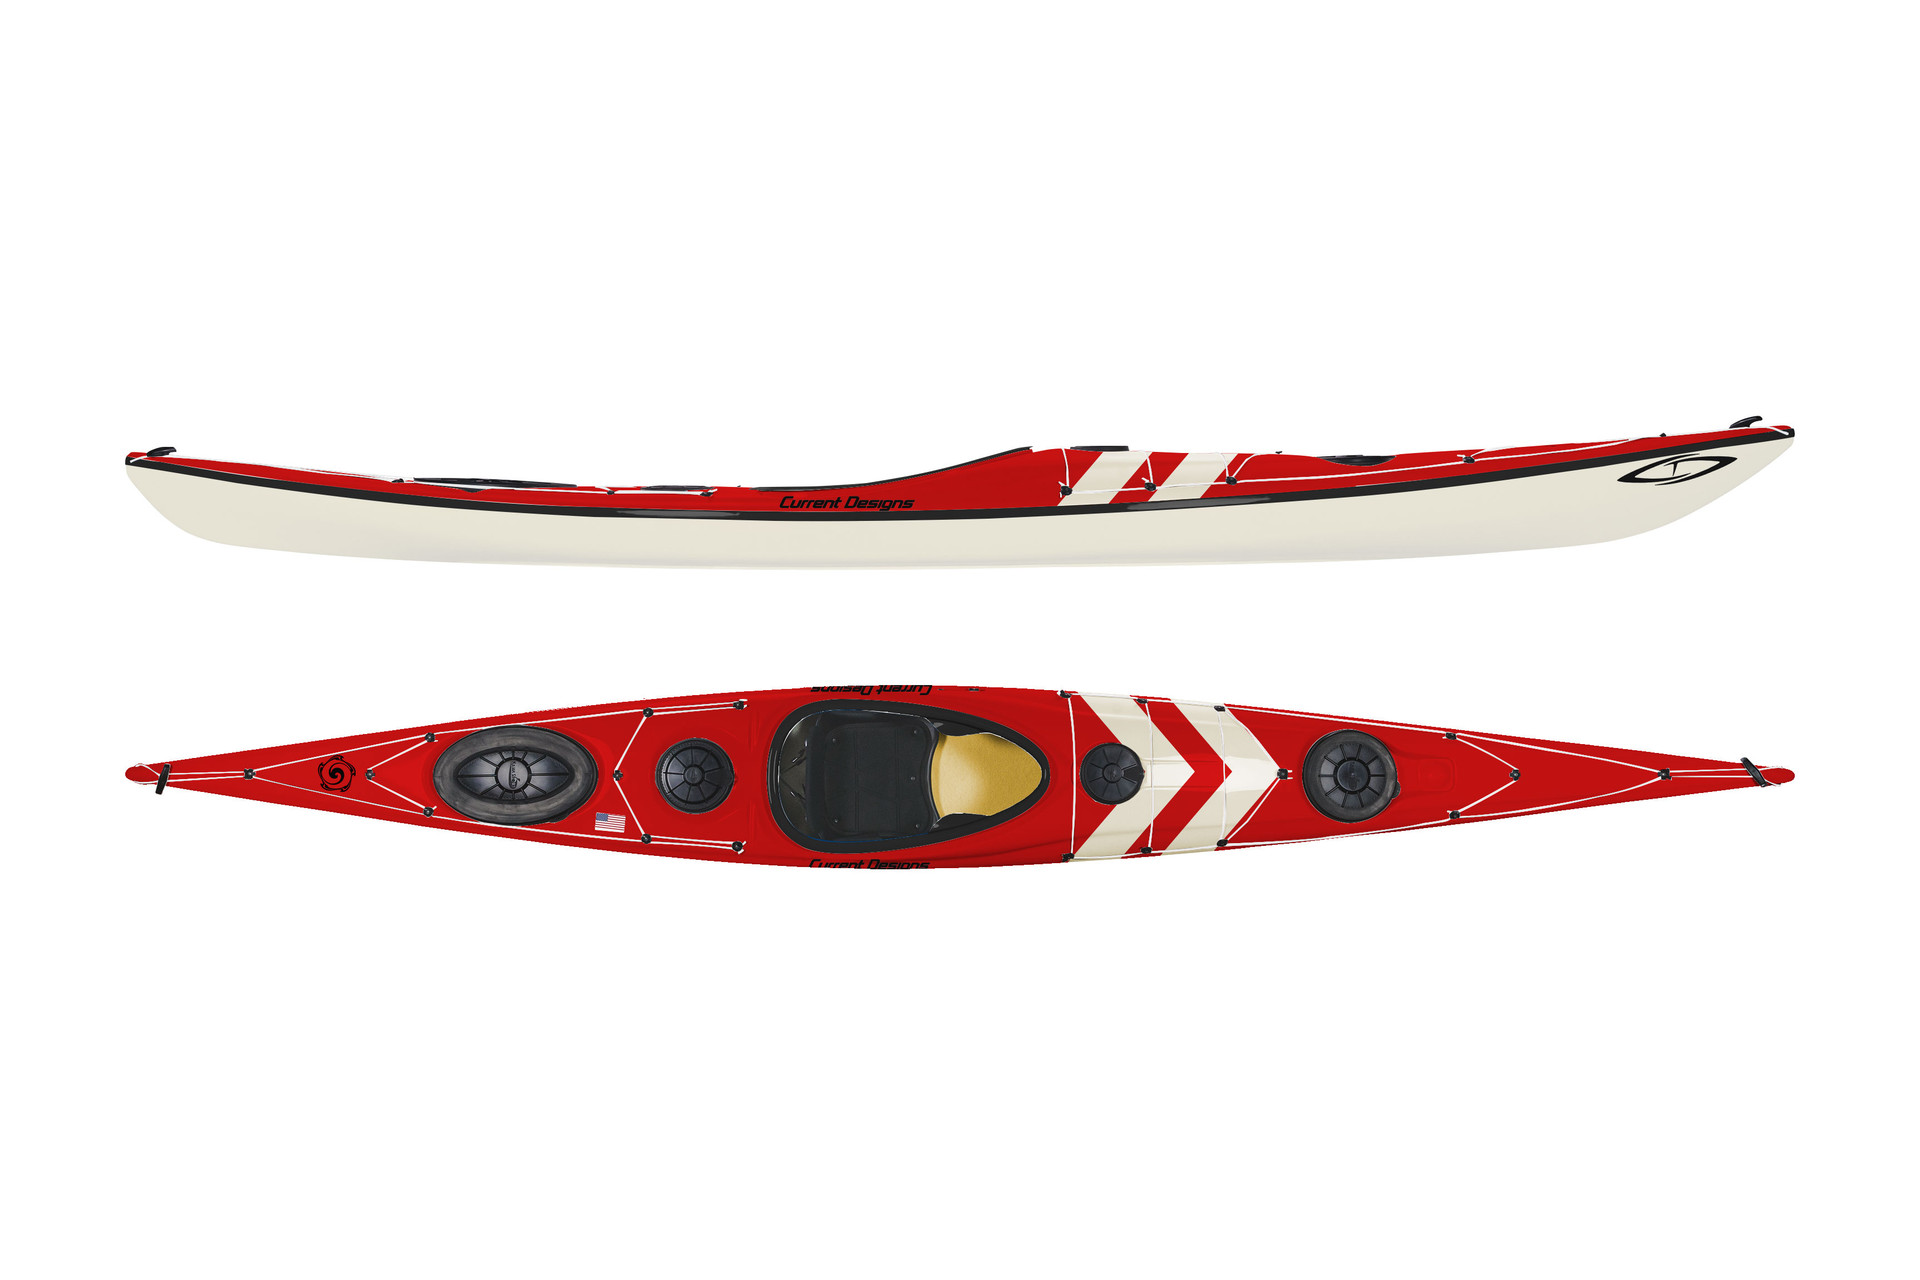 Current Designs - Composite Sea Kayaks